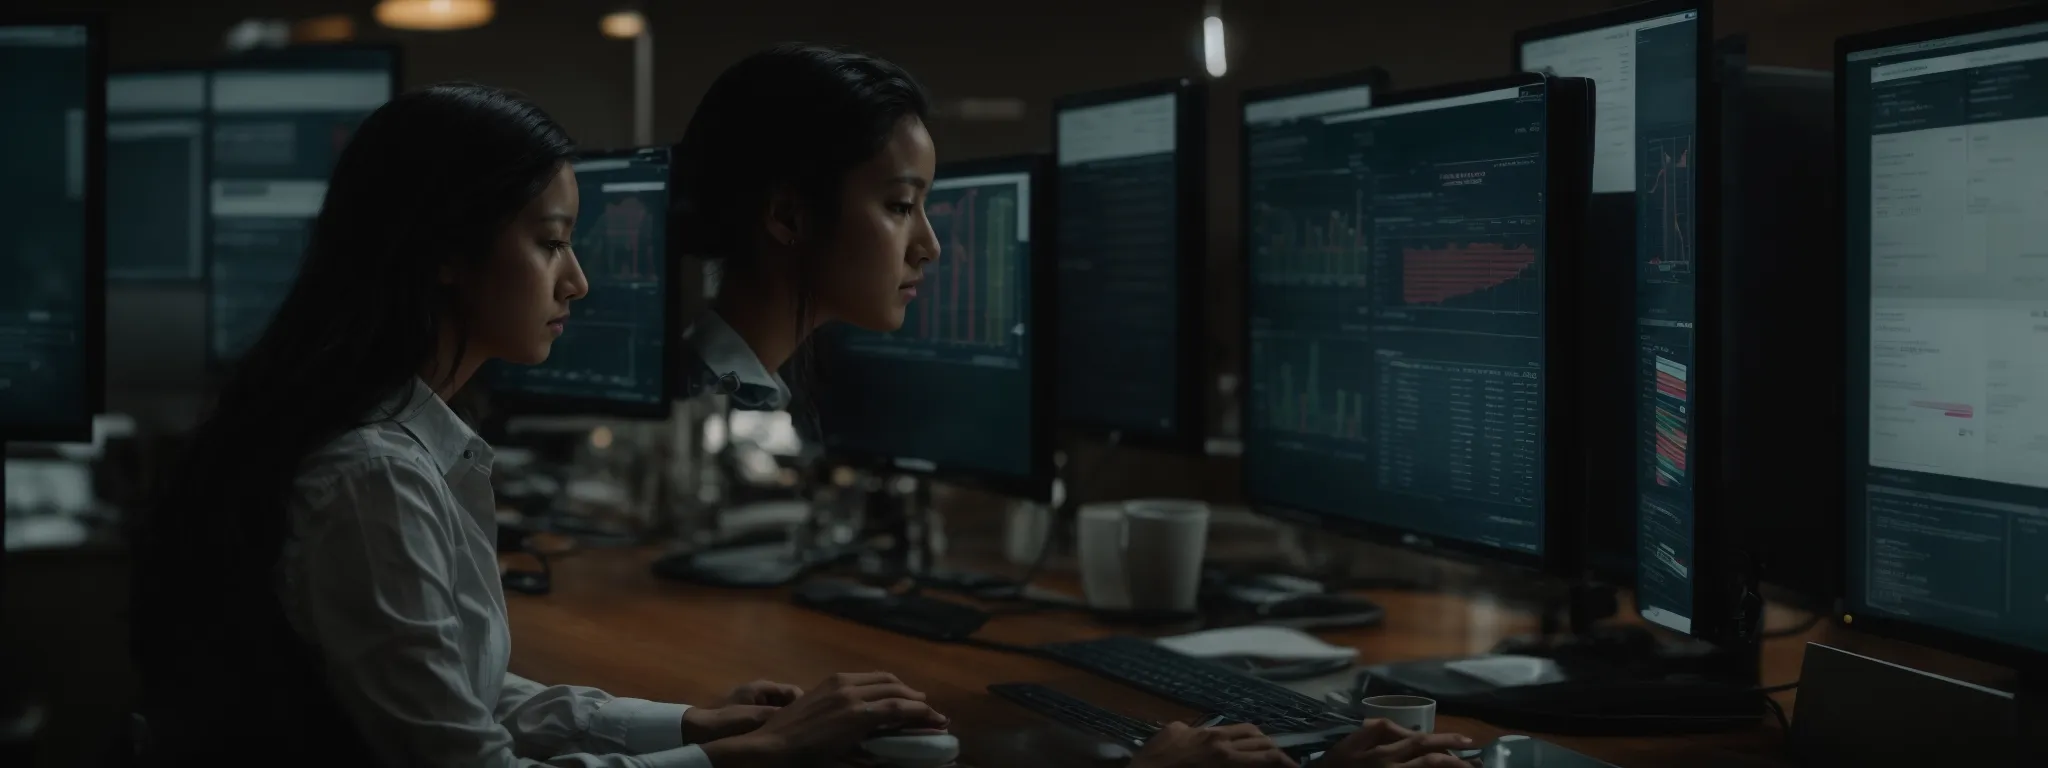 a digital marketer scrutinizes a computer screen displaying a website analytics dashboard, amidst an office environment.